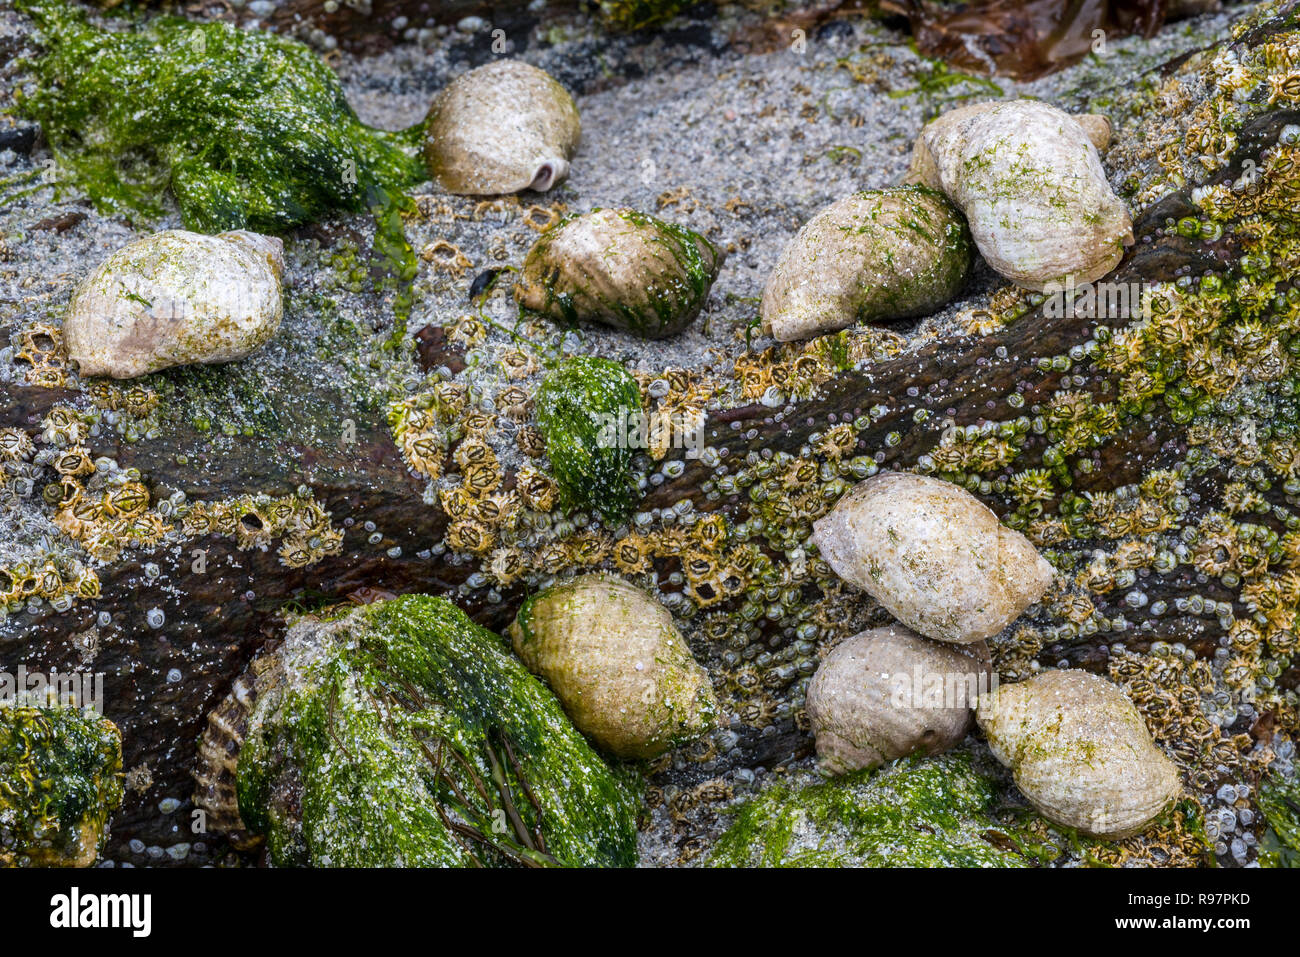 Dog whelks / dogwhelks, Atlantic dogwinkles (Nucella lapillus / Buccinum filosa) feeding on barnacles on rock in tidal rockpool Stock Photo